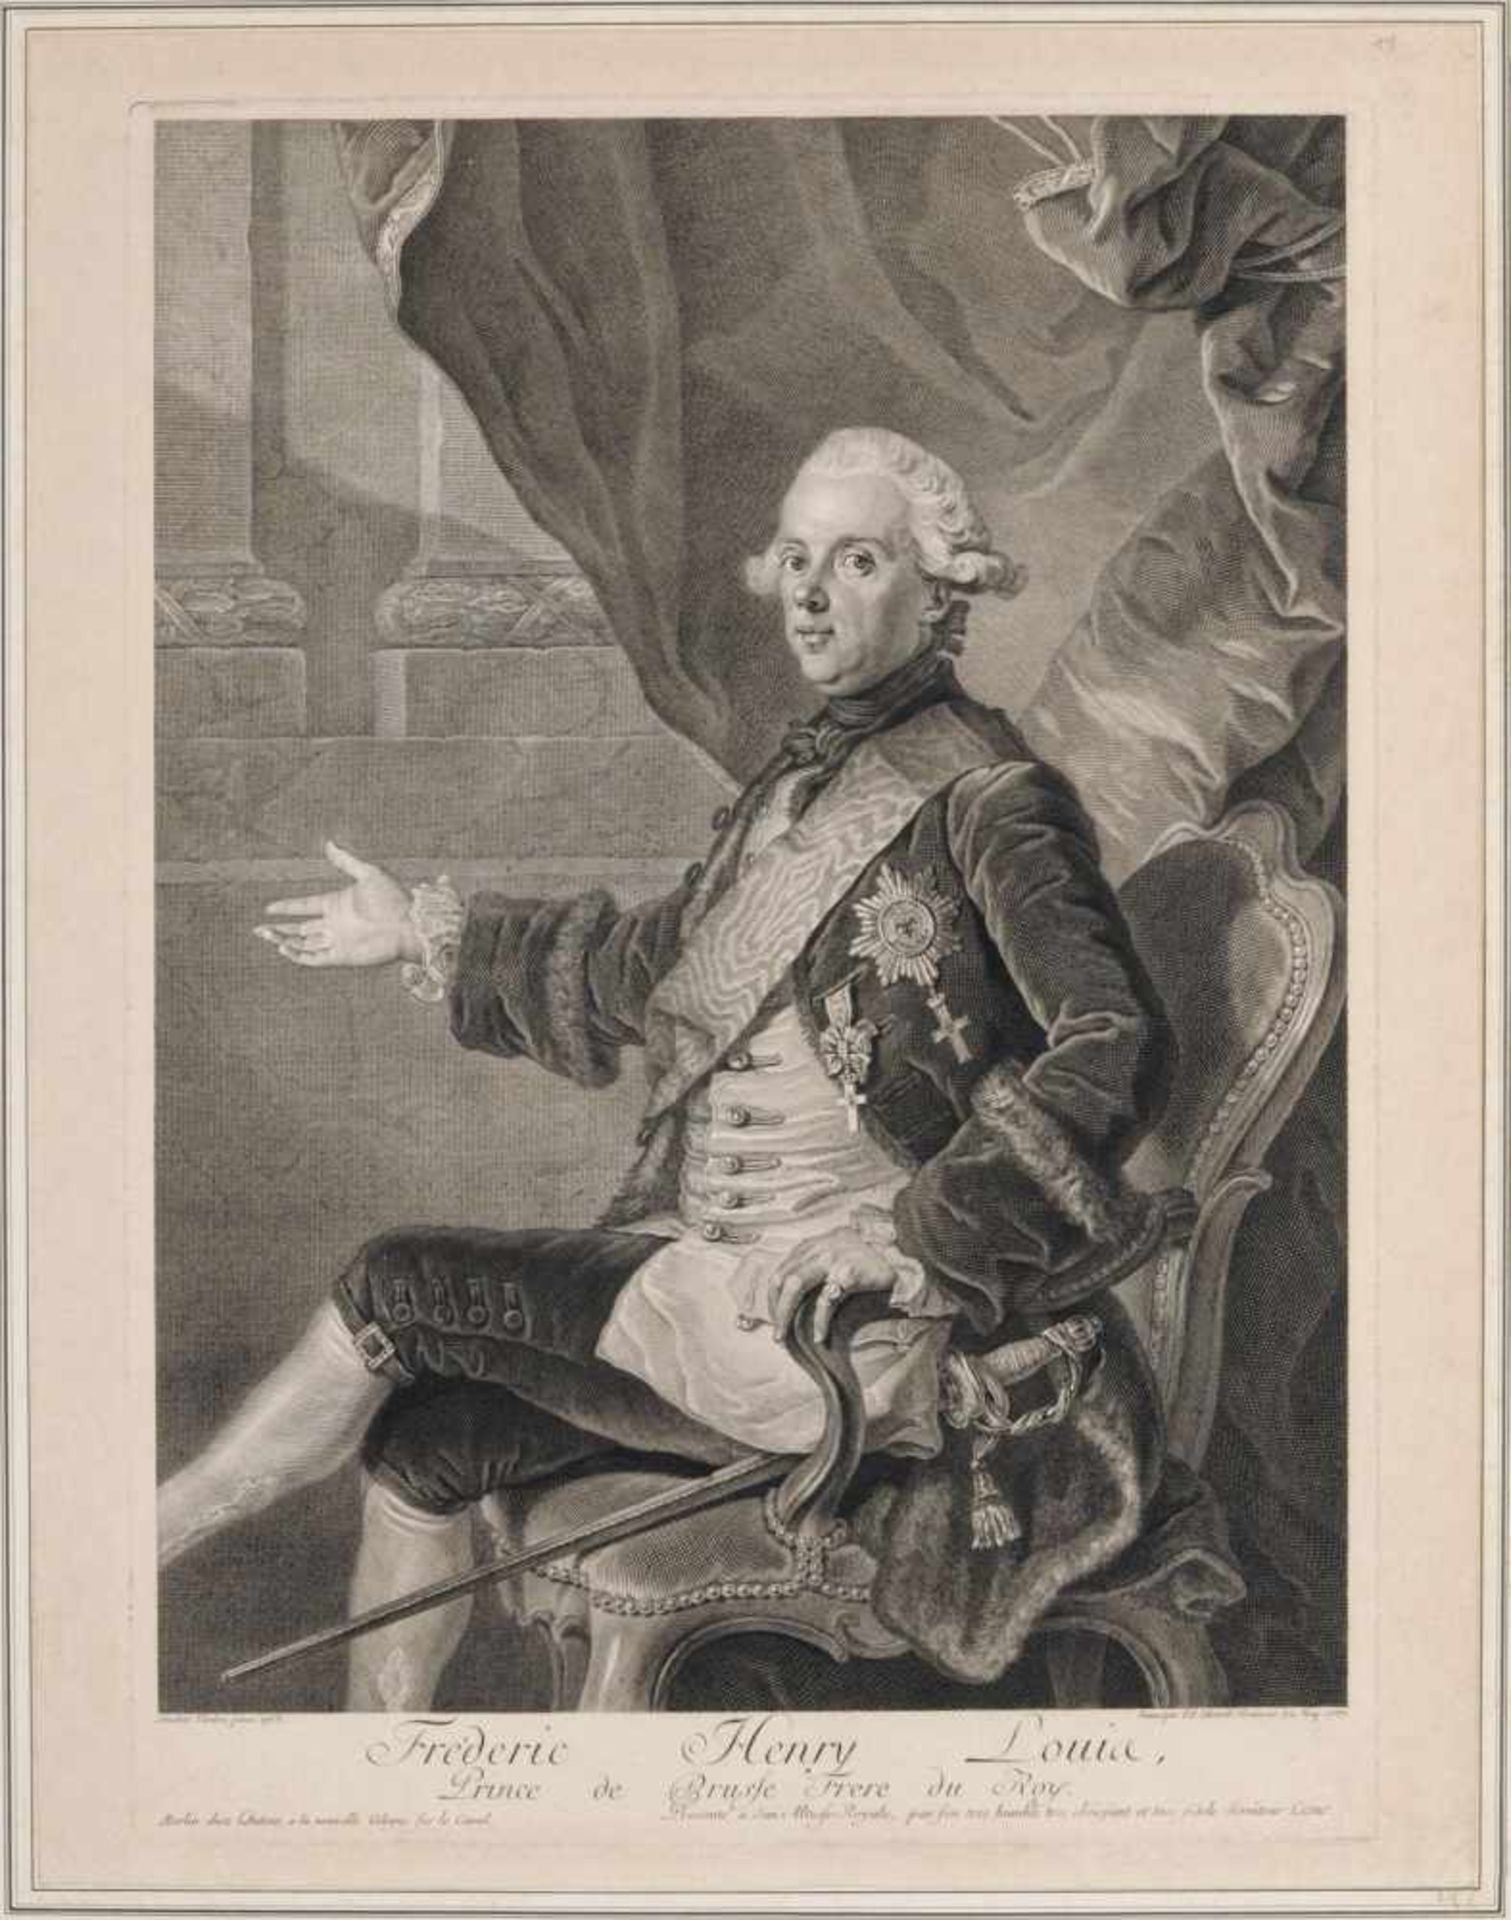 Georg Friedrich Schmidt "Frederic Henry Louis, Prince de Prusse Frere du Roy". 1767. Georg Friedrich